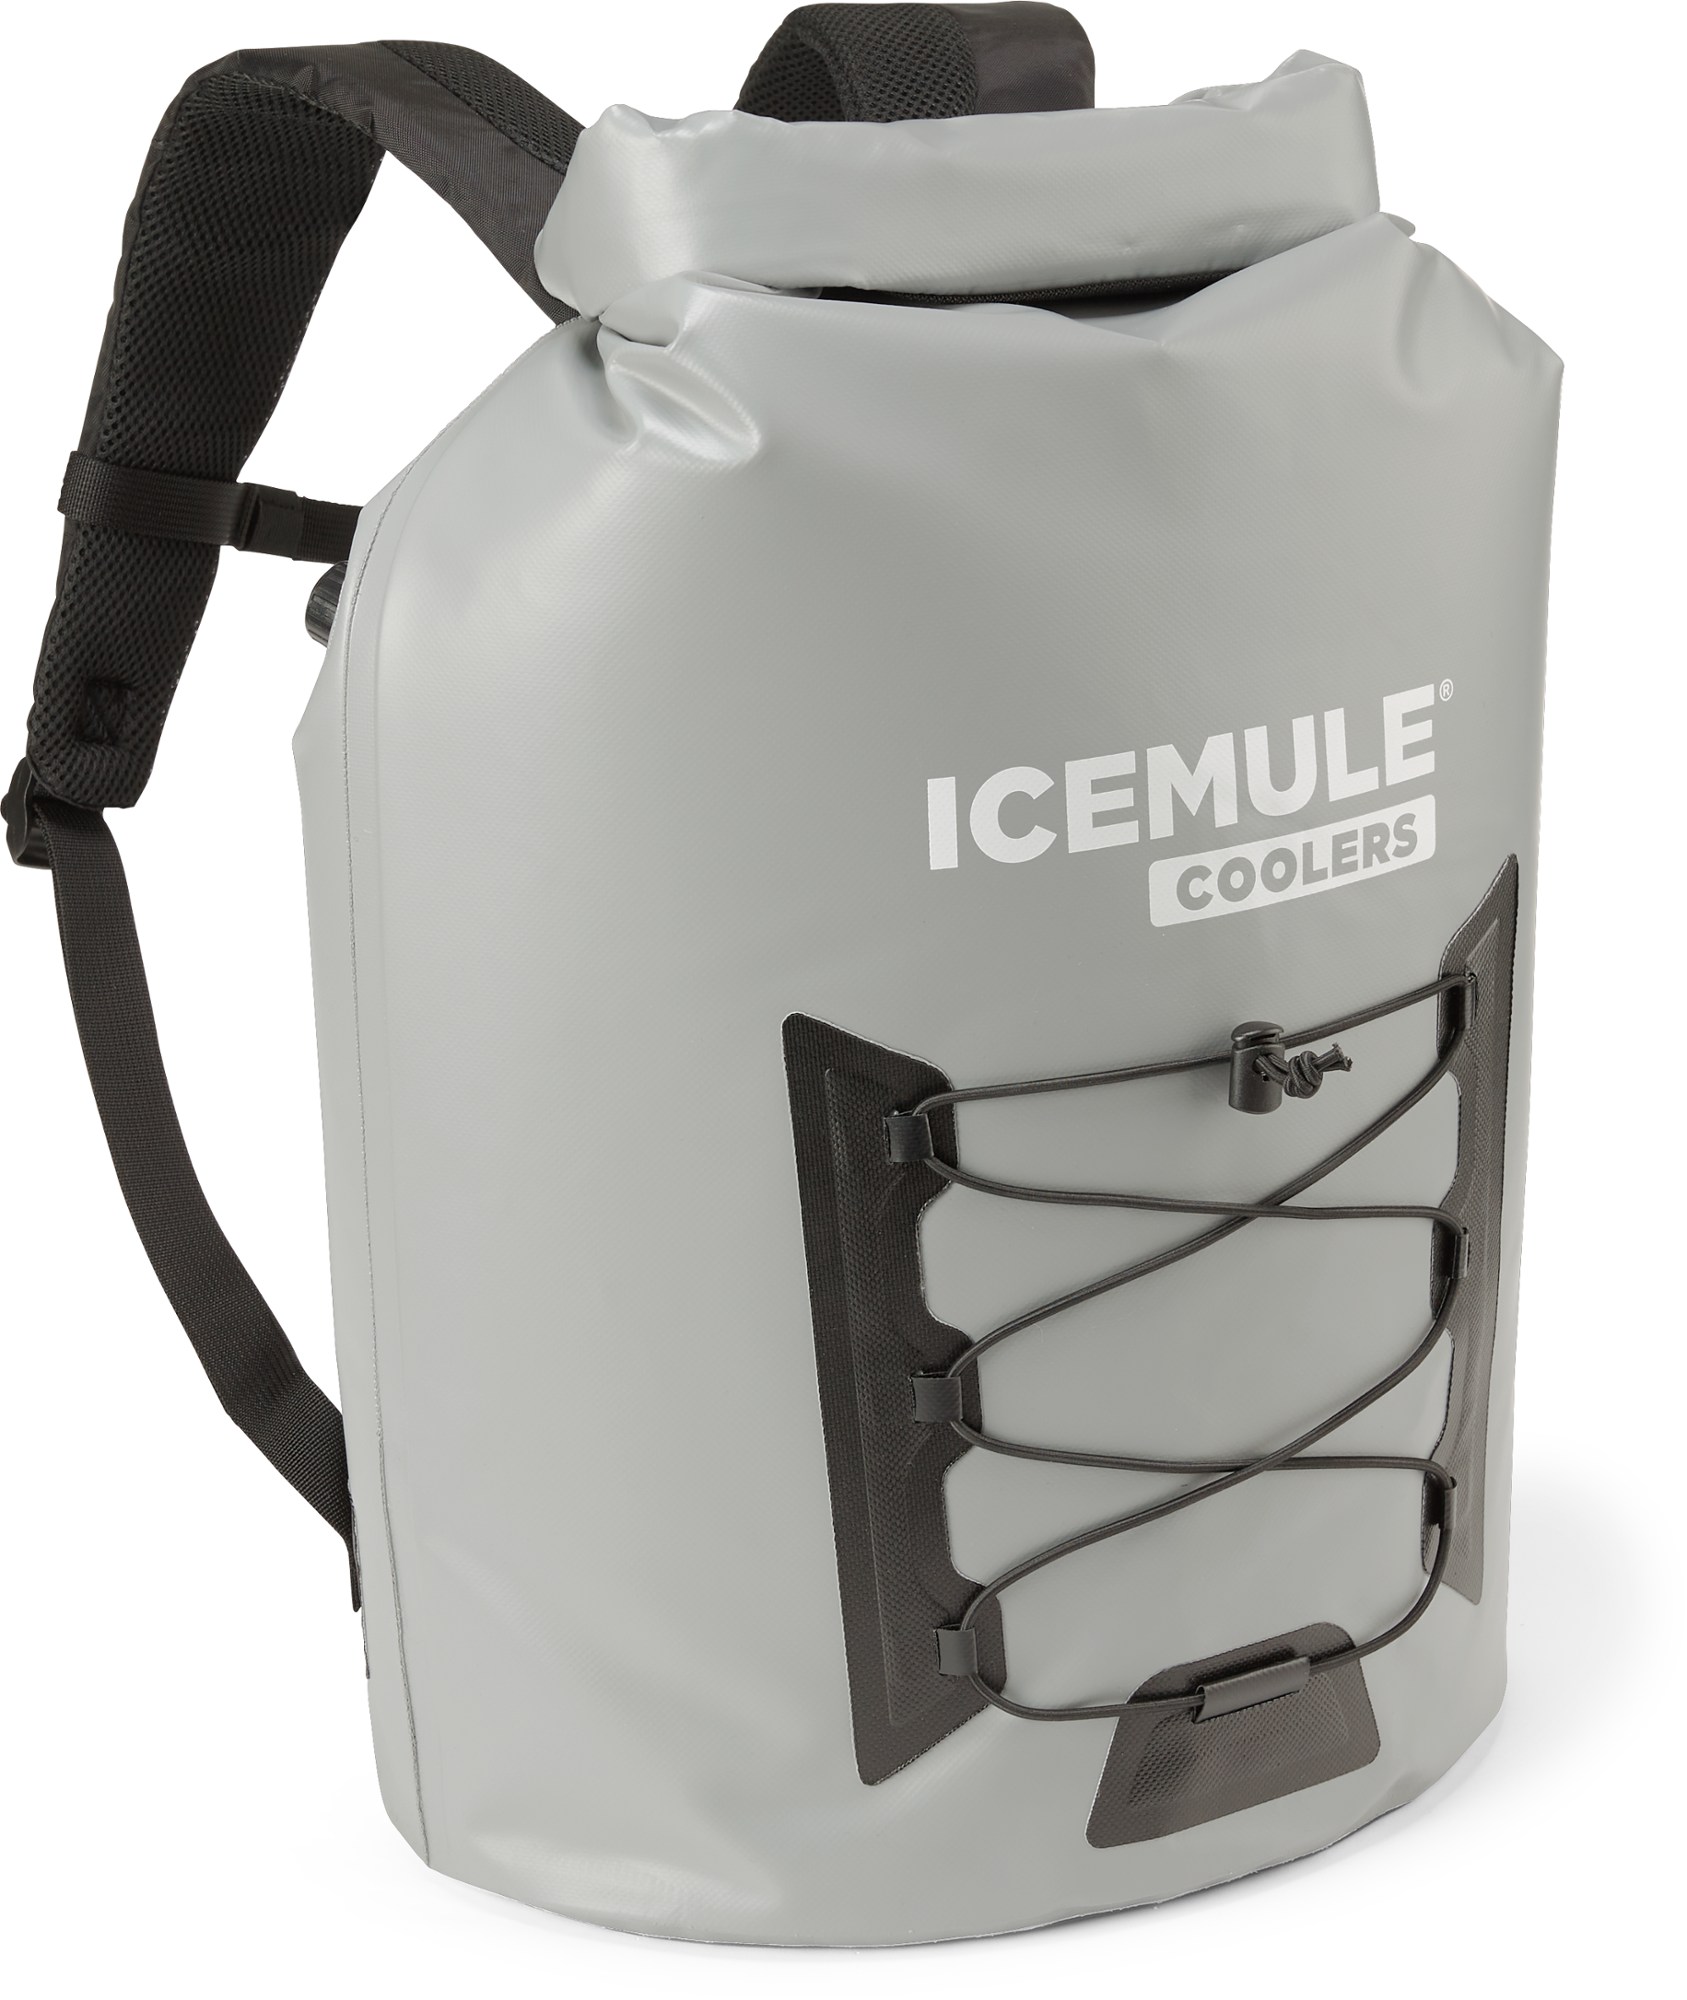 Icemule Pro Large cooler